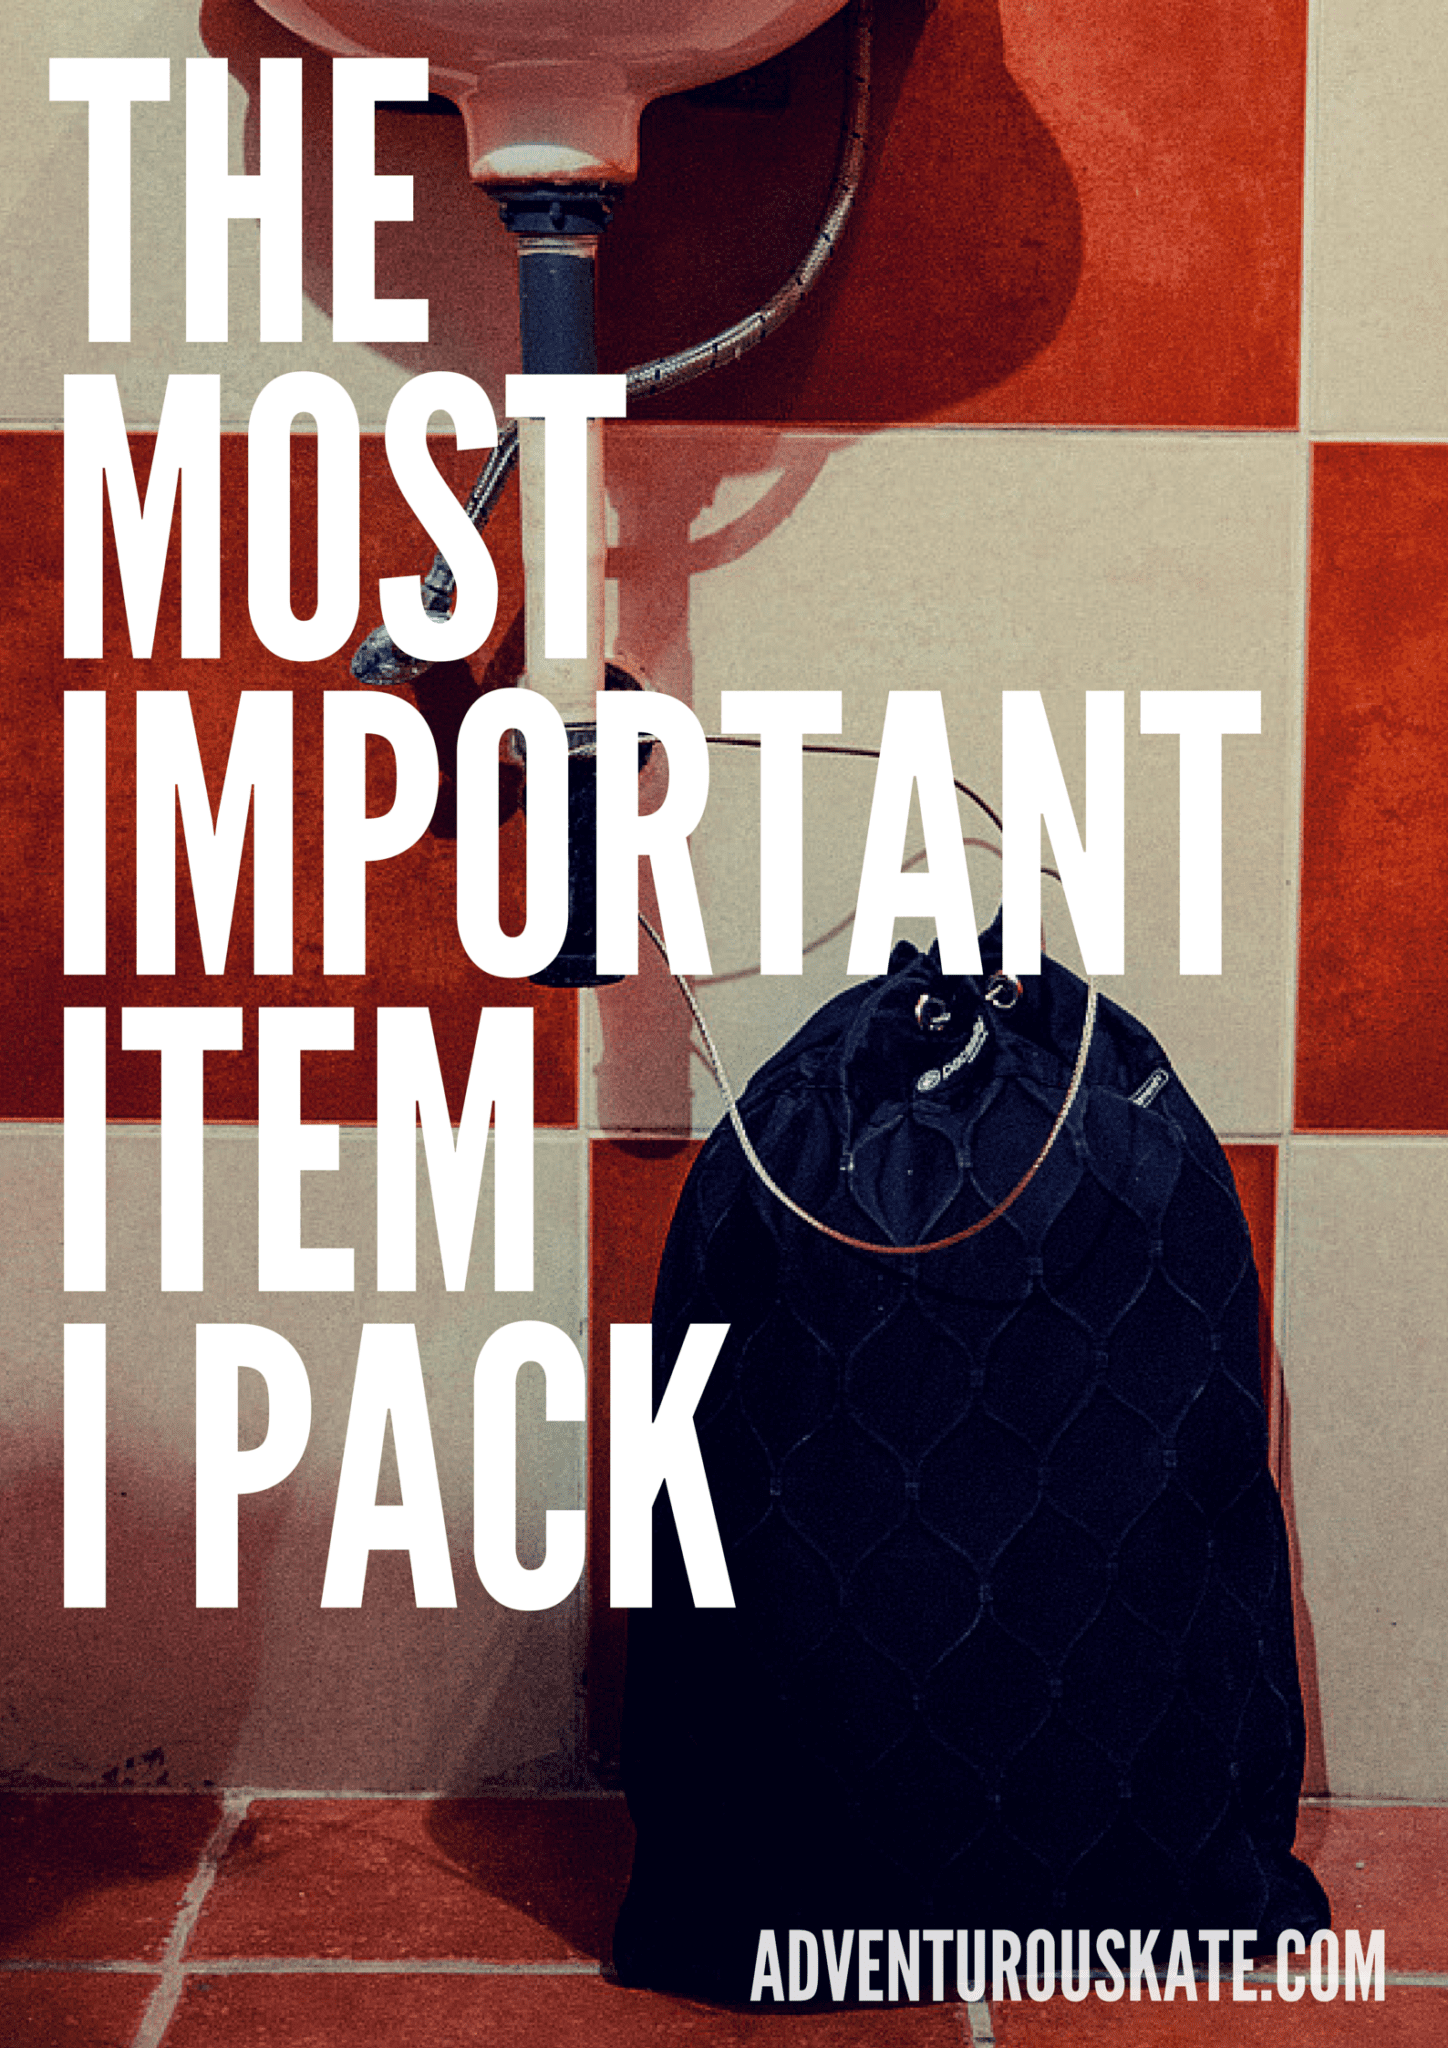 The Most ImportantItem I Pack